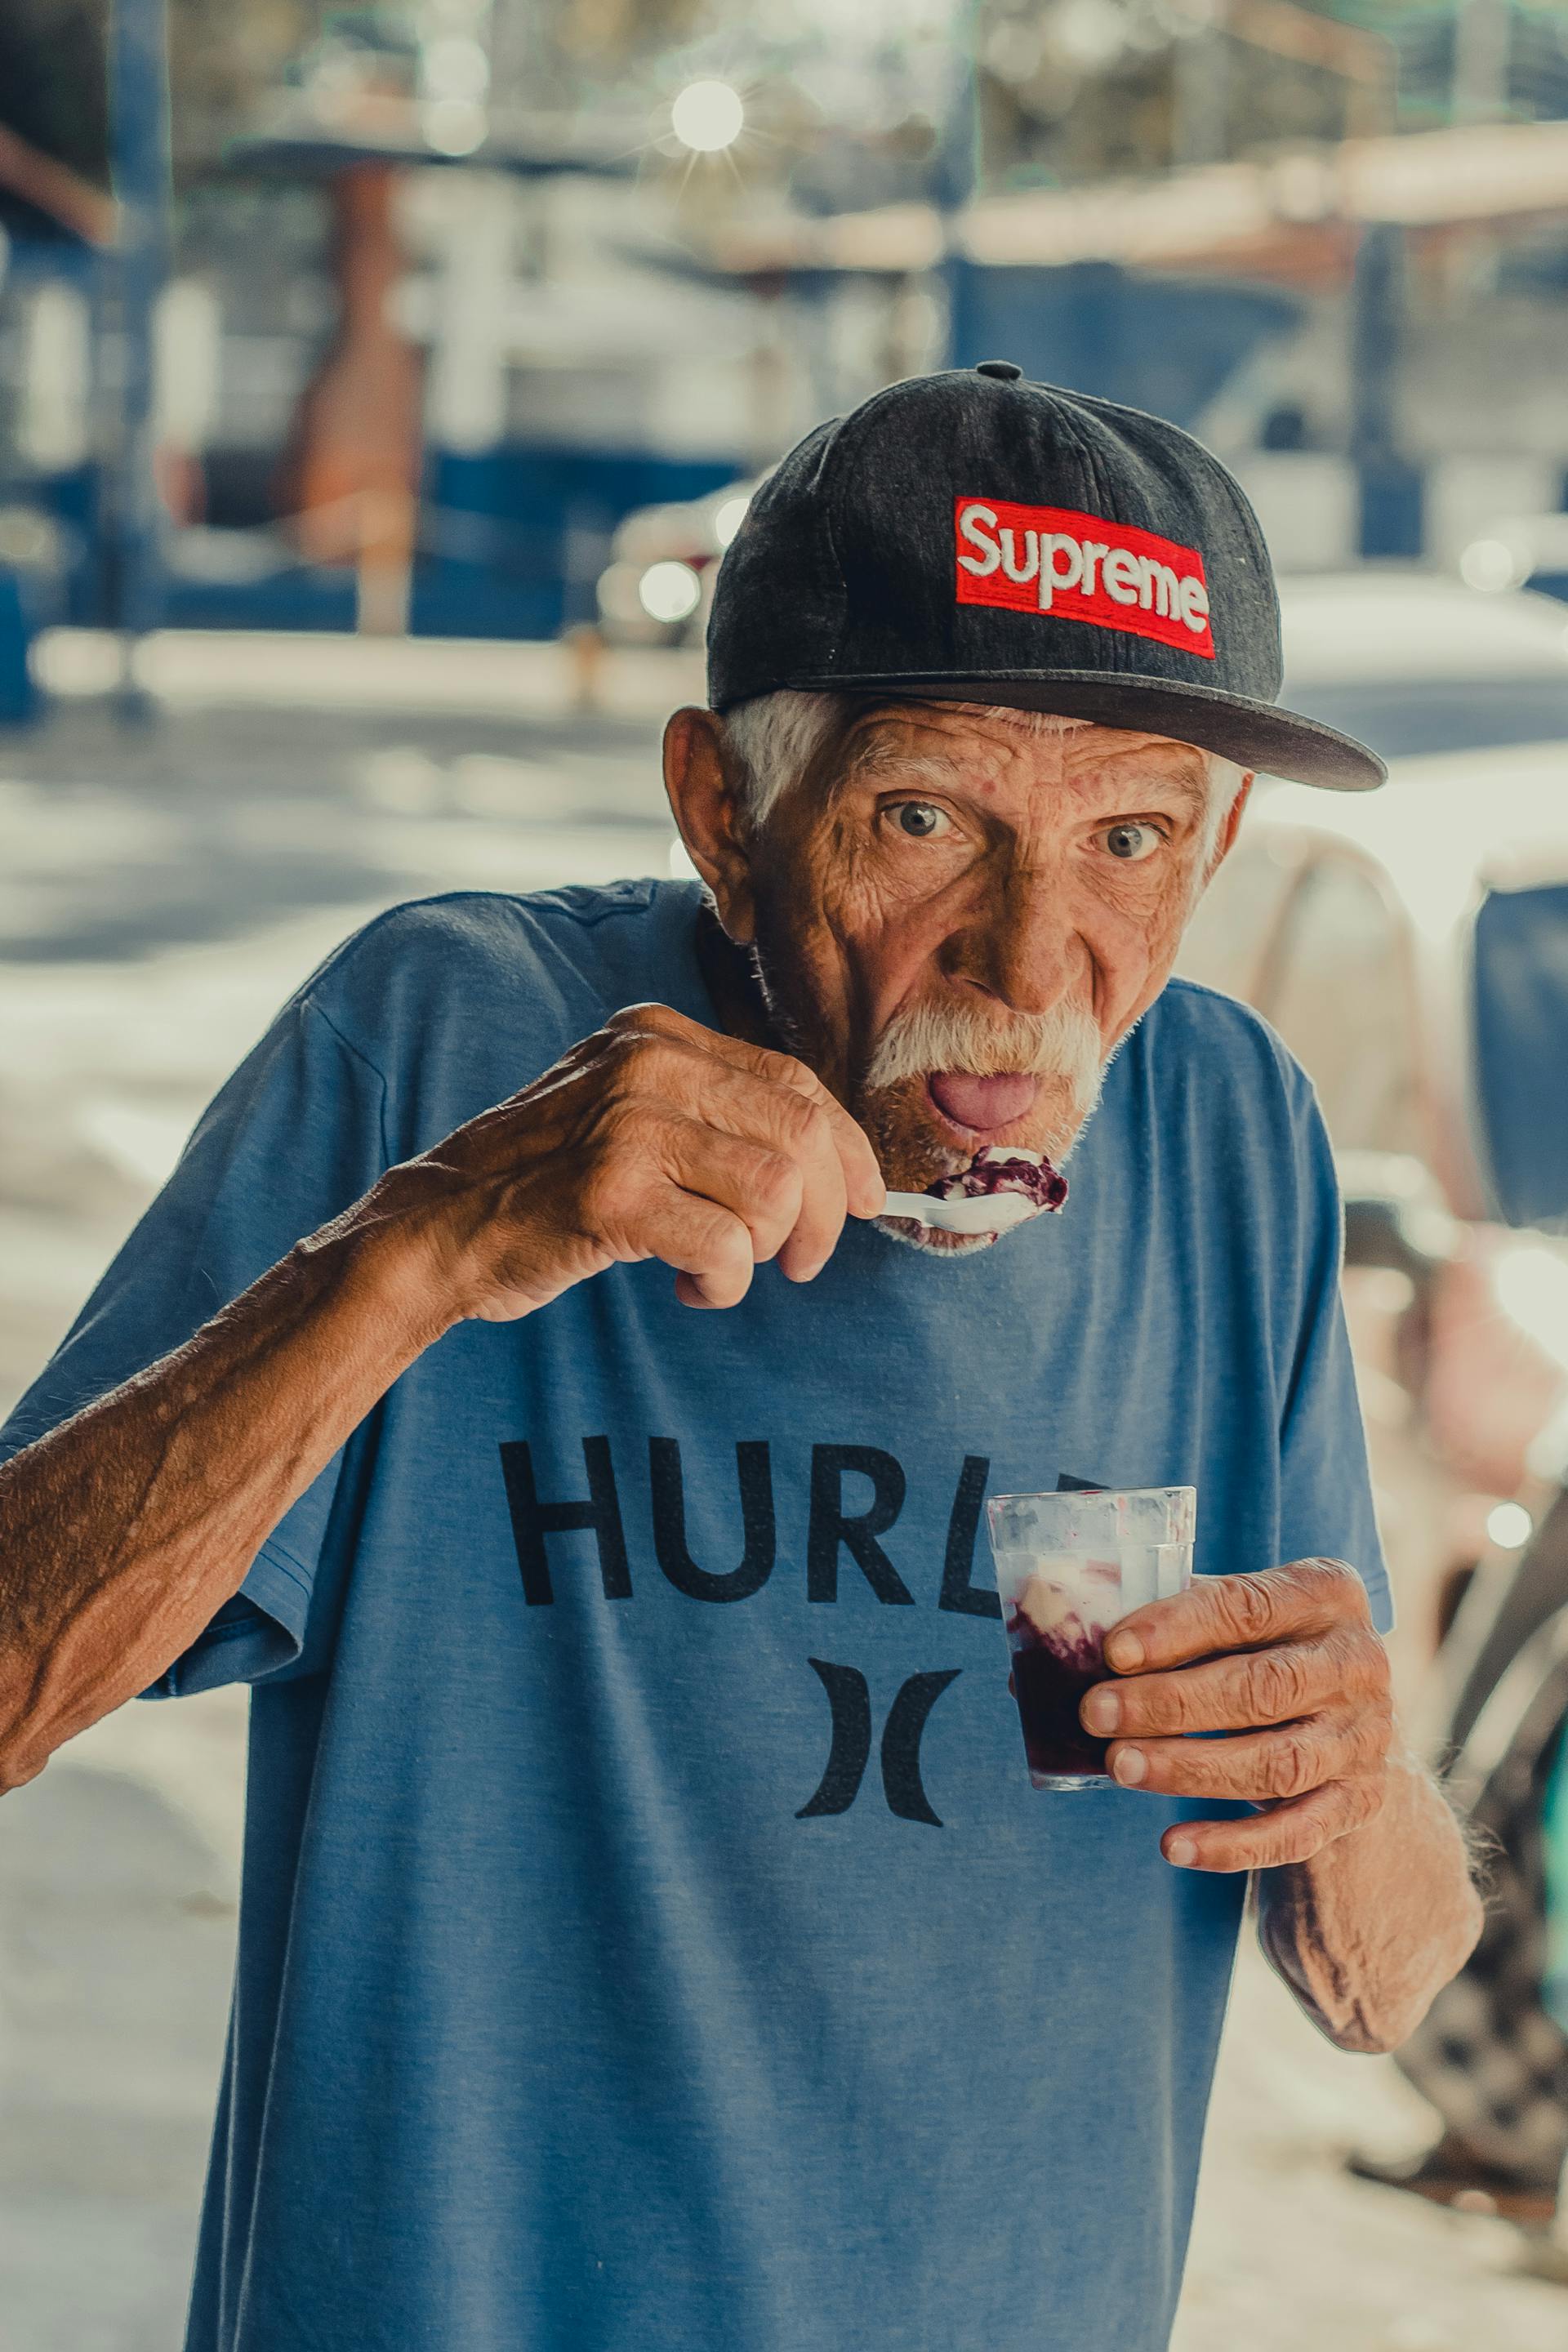 An elderly man eating an ice cream | Source: Pexels